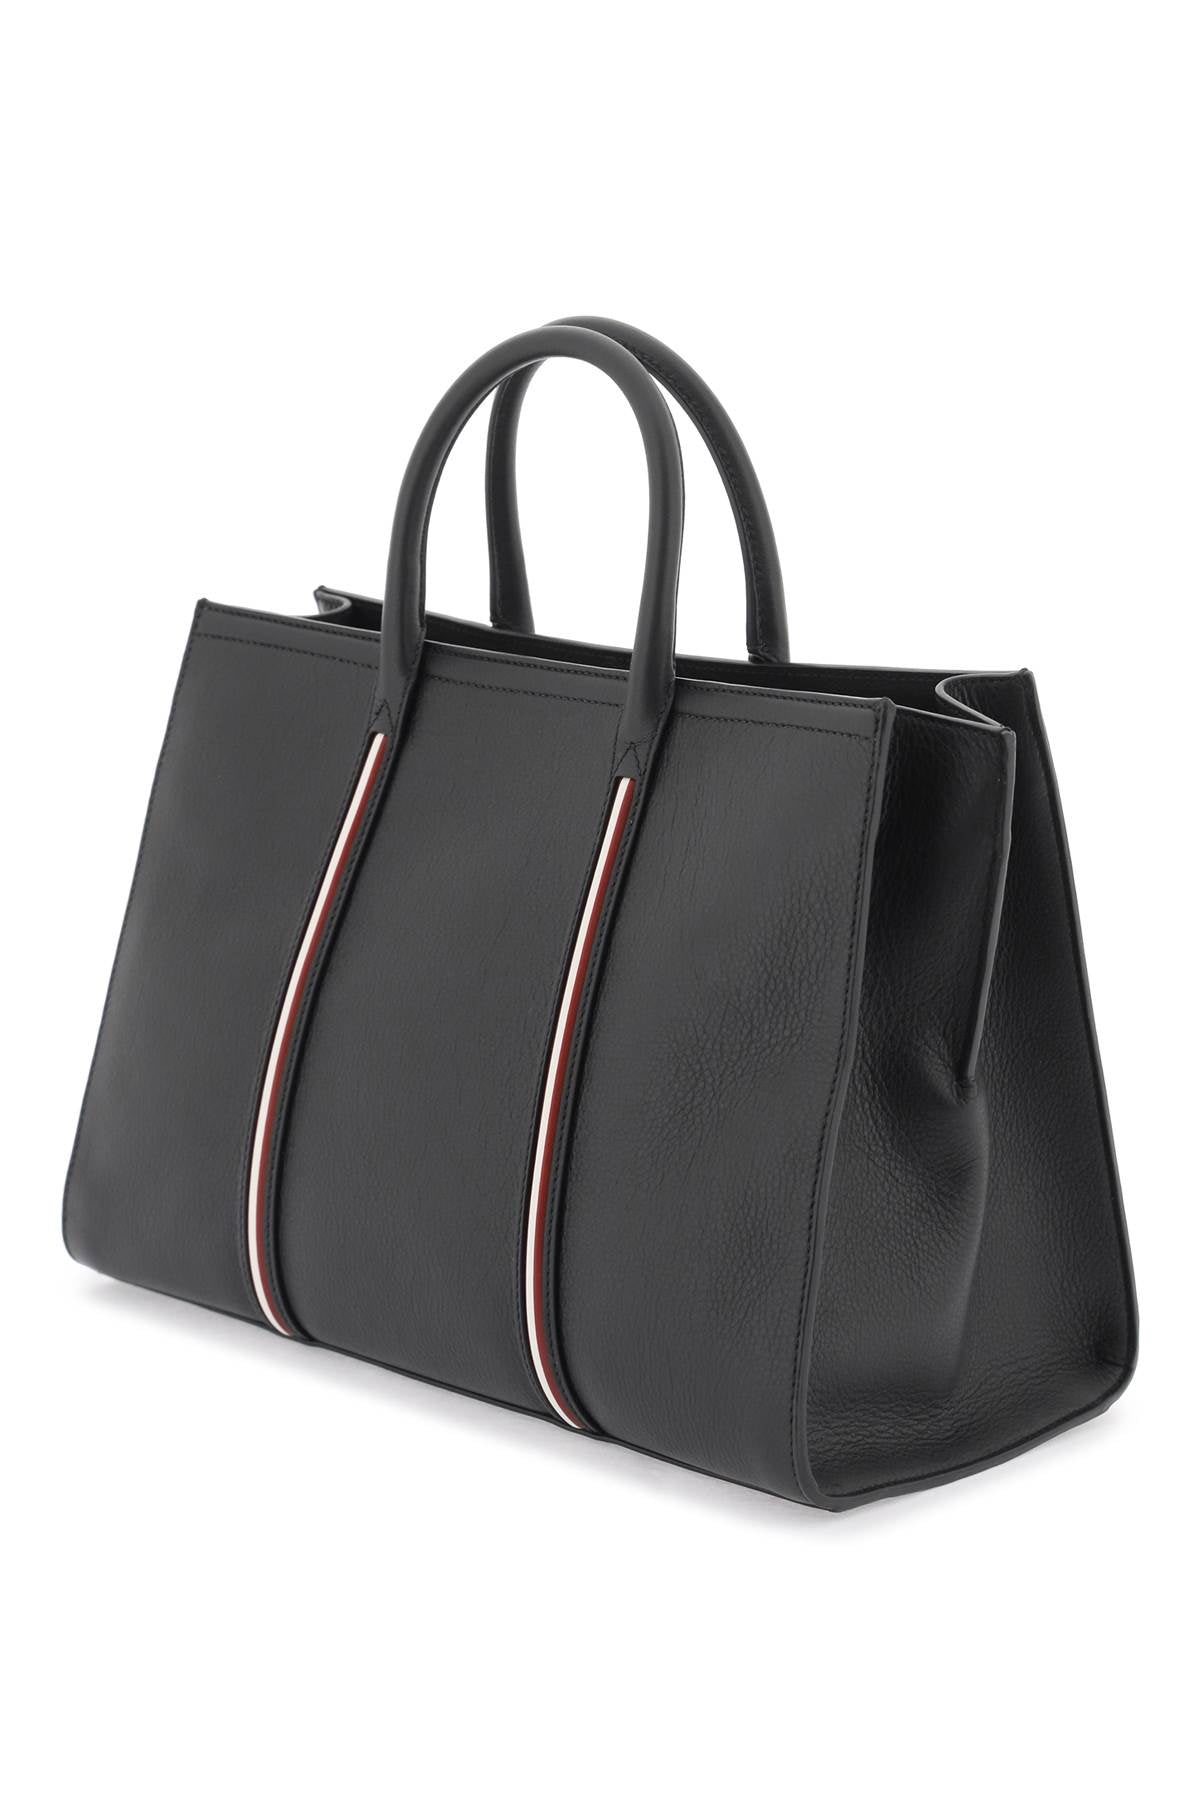 BALLY Luxurious Nero Tote Handbag for the Fashion-Forward Woman